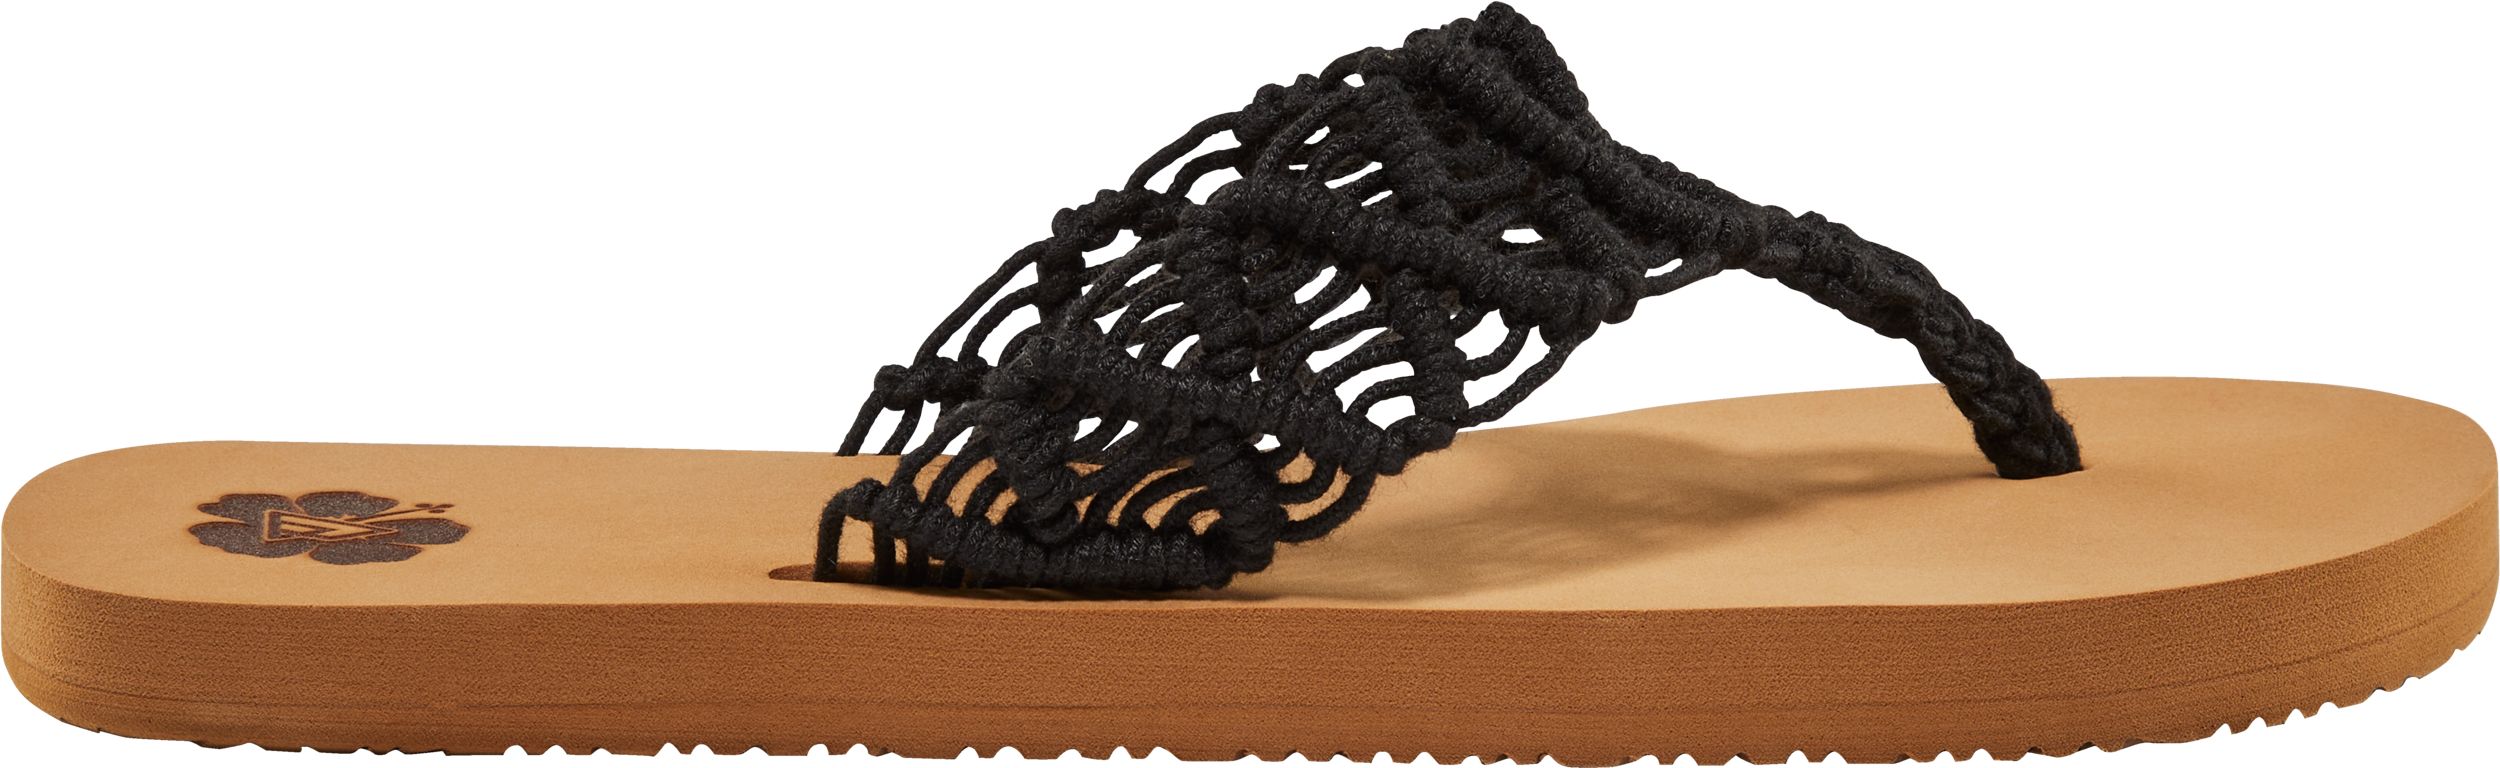 Image of Ripzone Women's Oasis Crochet Sandals